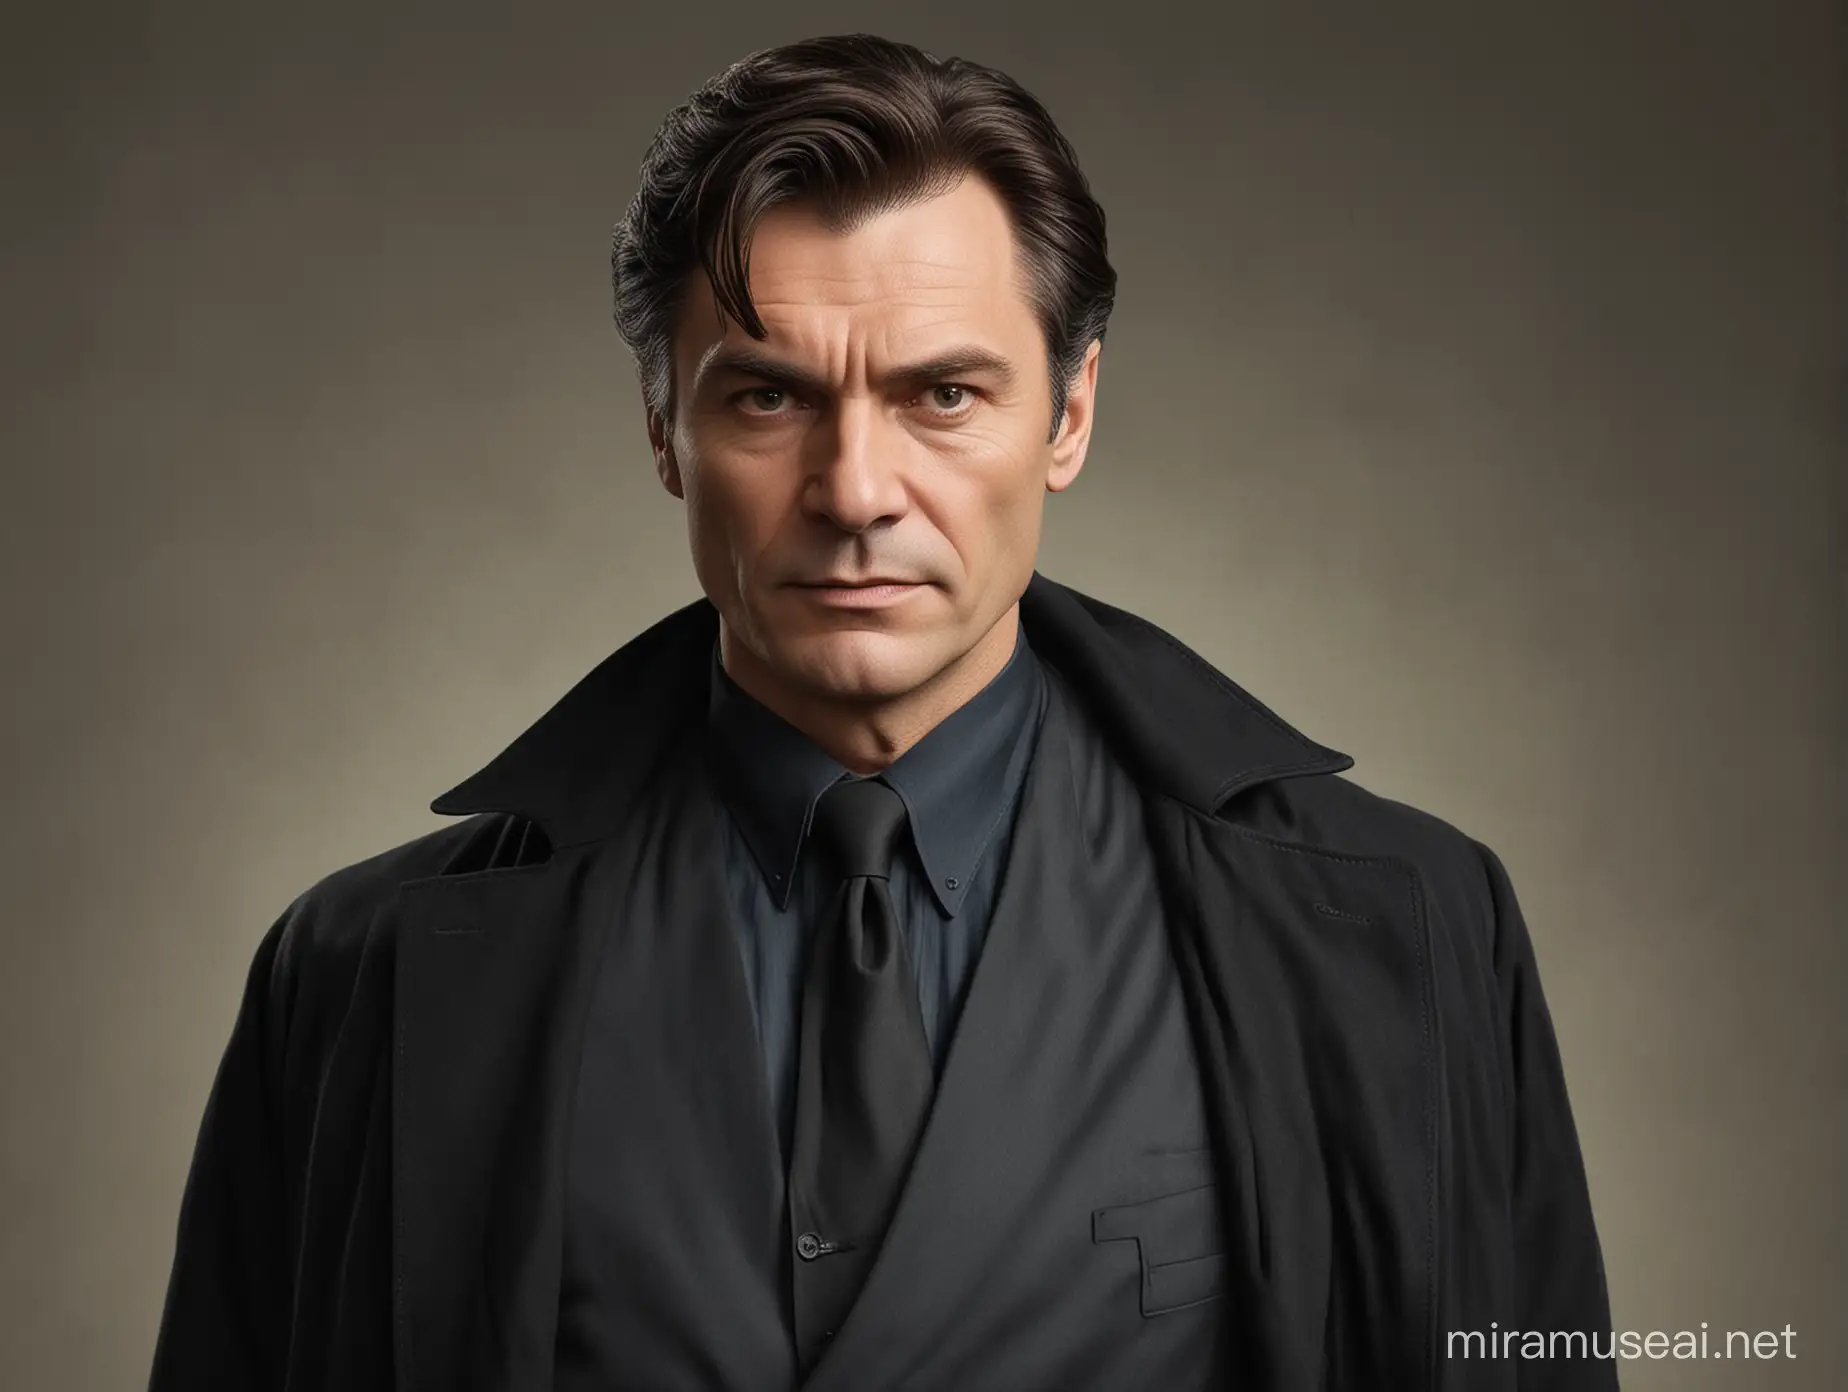 Oleg Yankovsky at his 50s as Bruce Wayne from DC